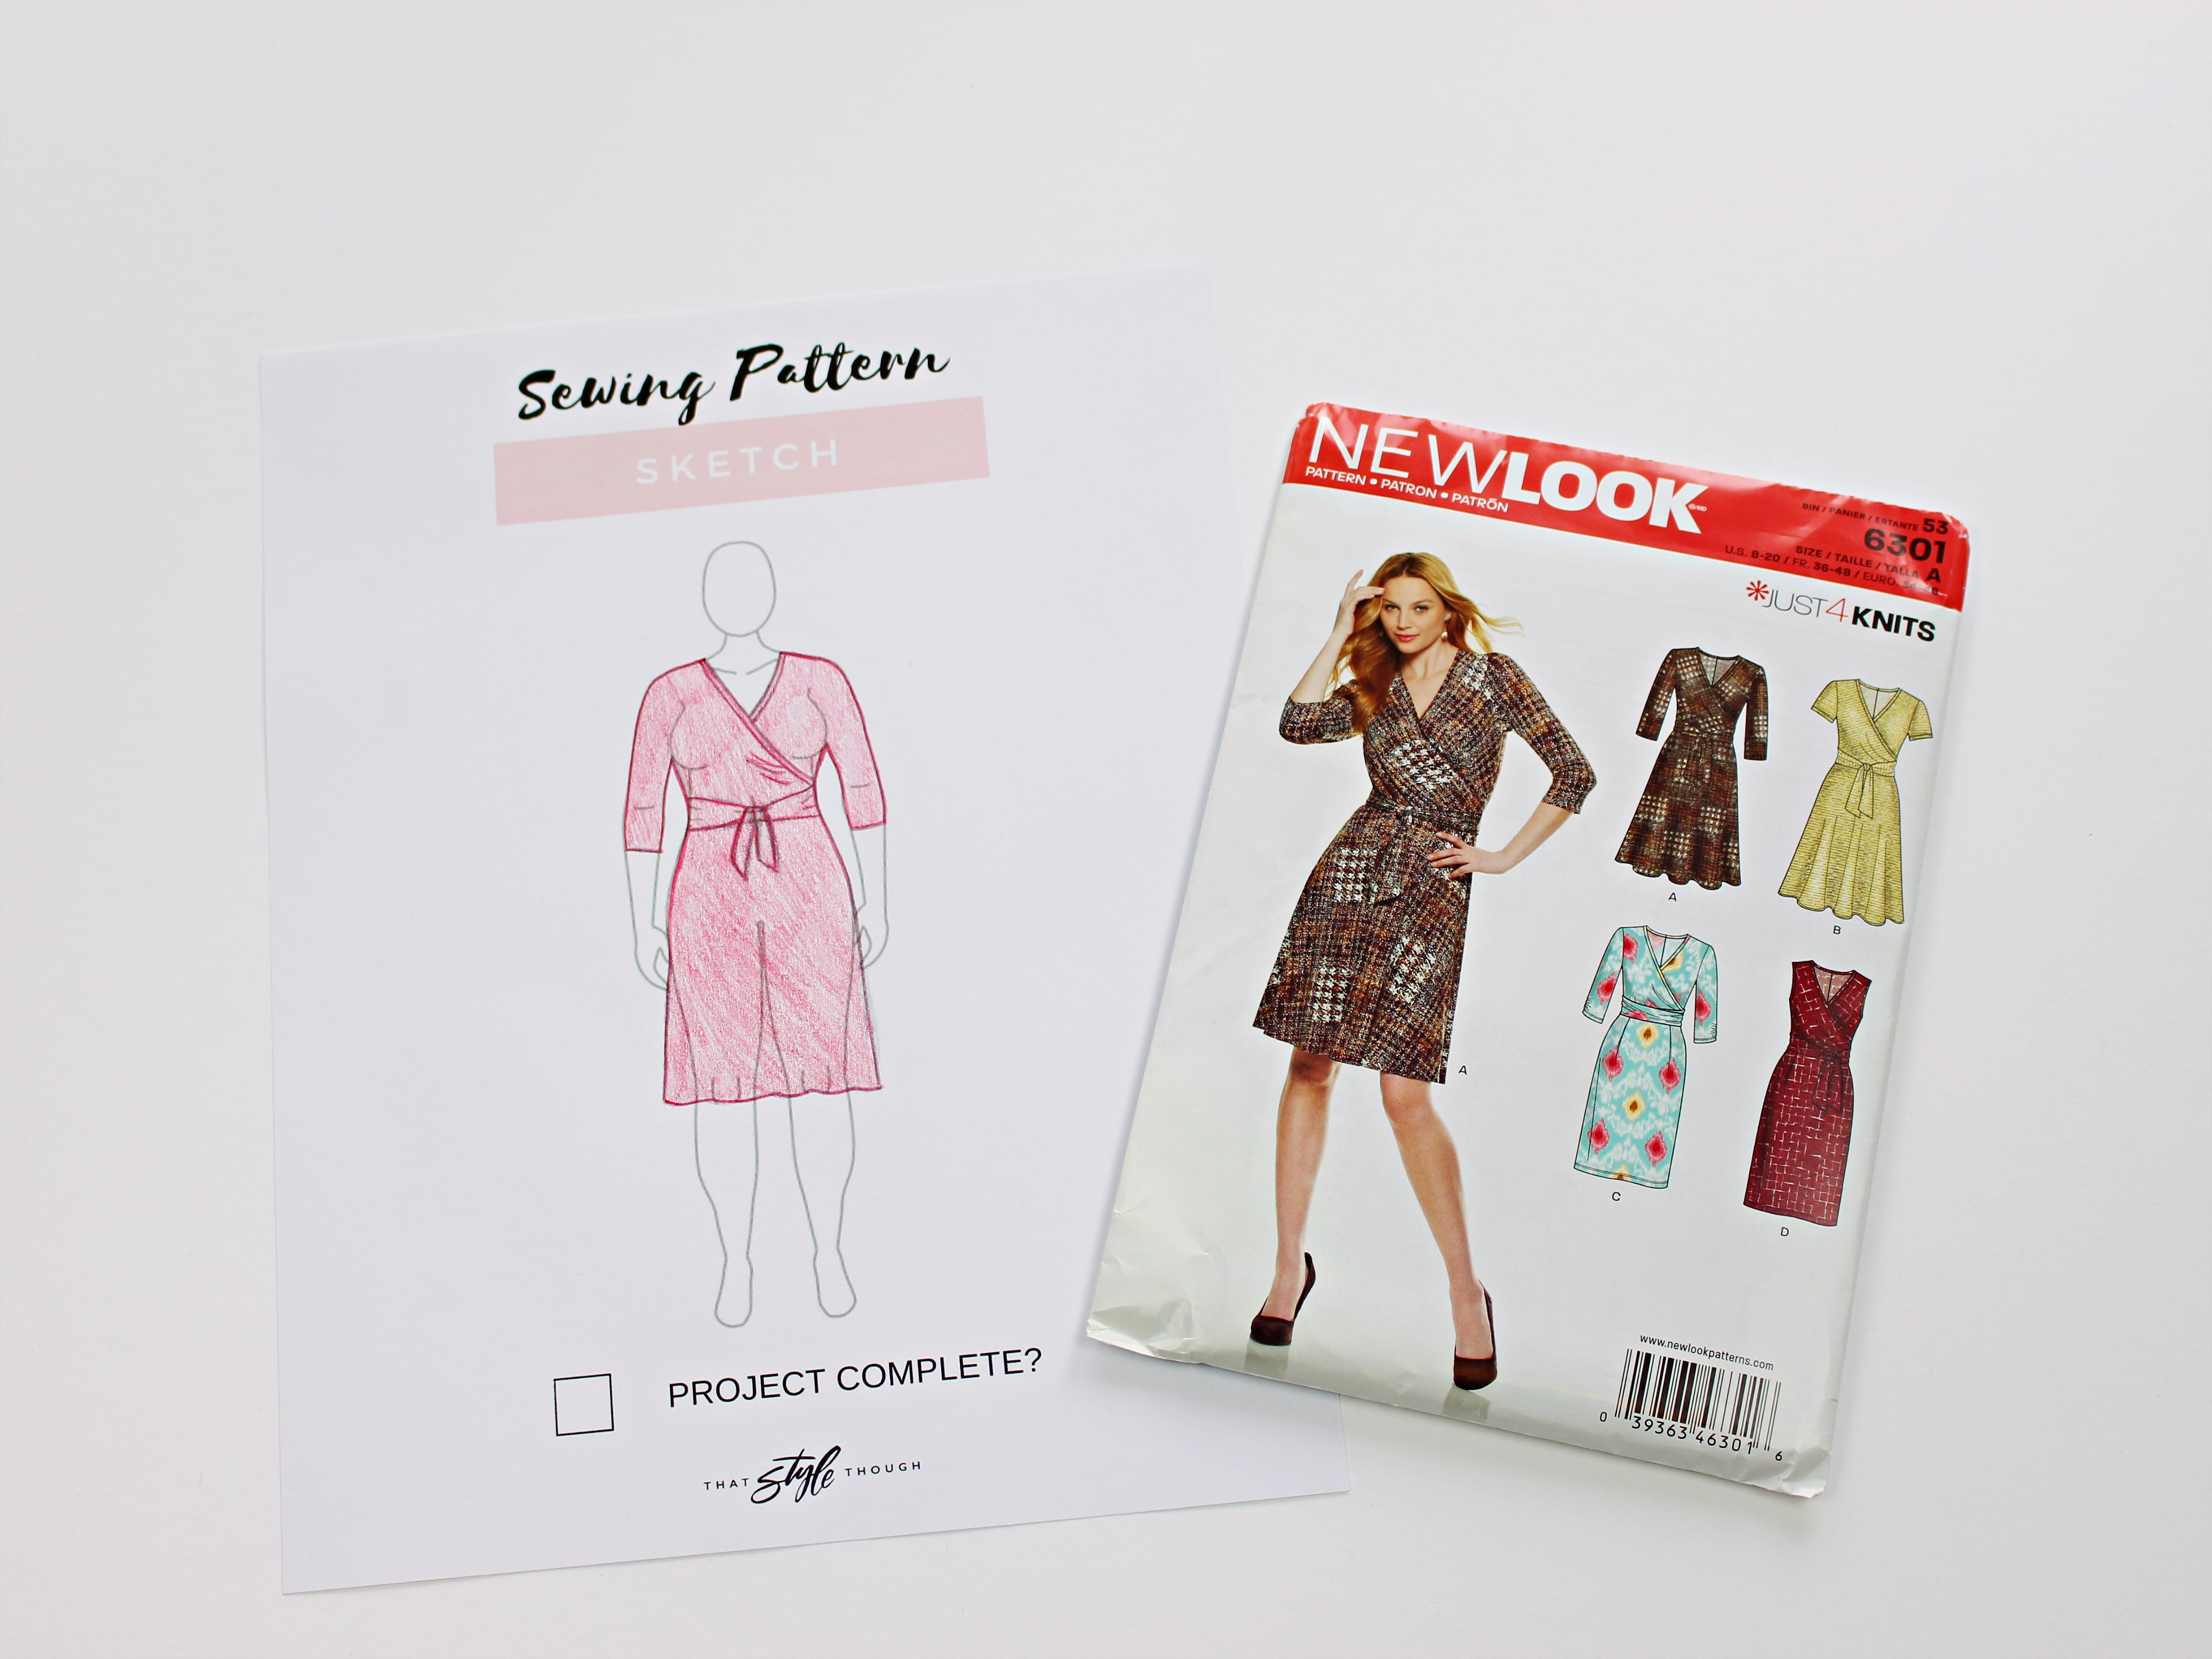 Dari Sewing Planner Photo 6 MyBodyModel with New Look 6301 dress pattern